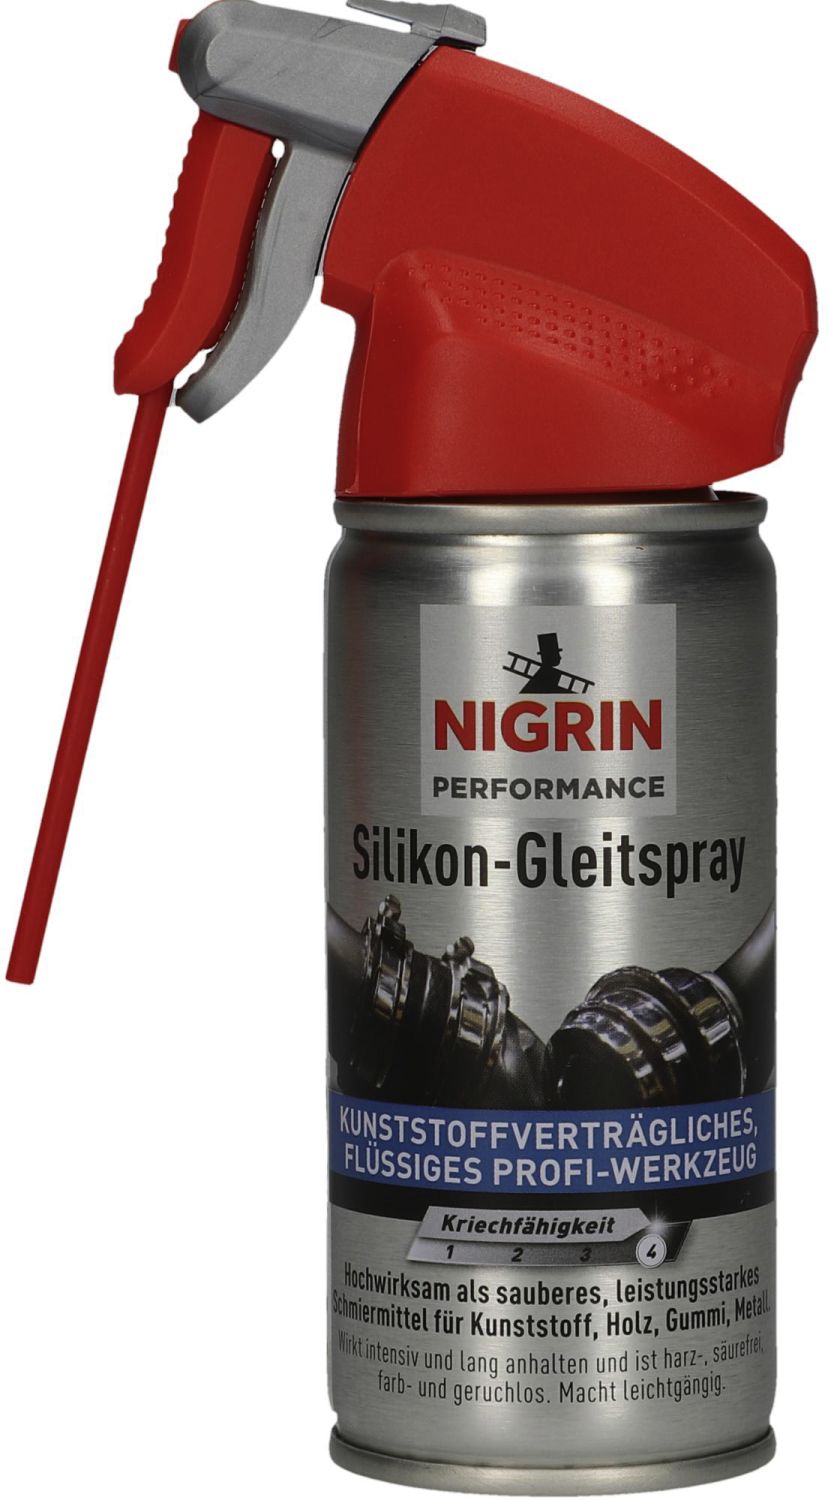 Nigrin Performance Silikon-Gleitspray 100 ml